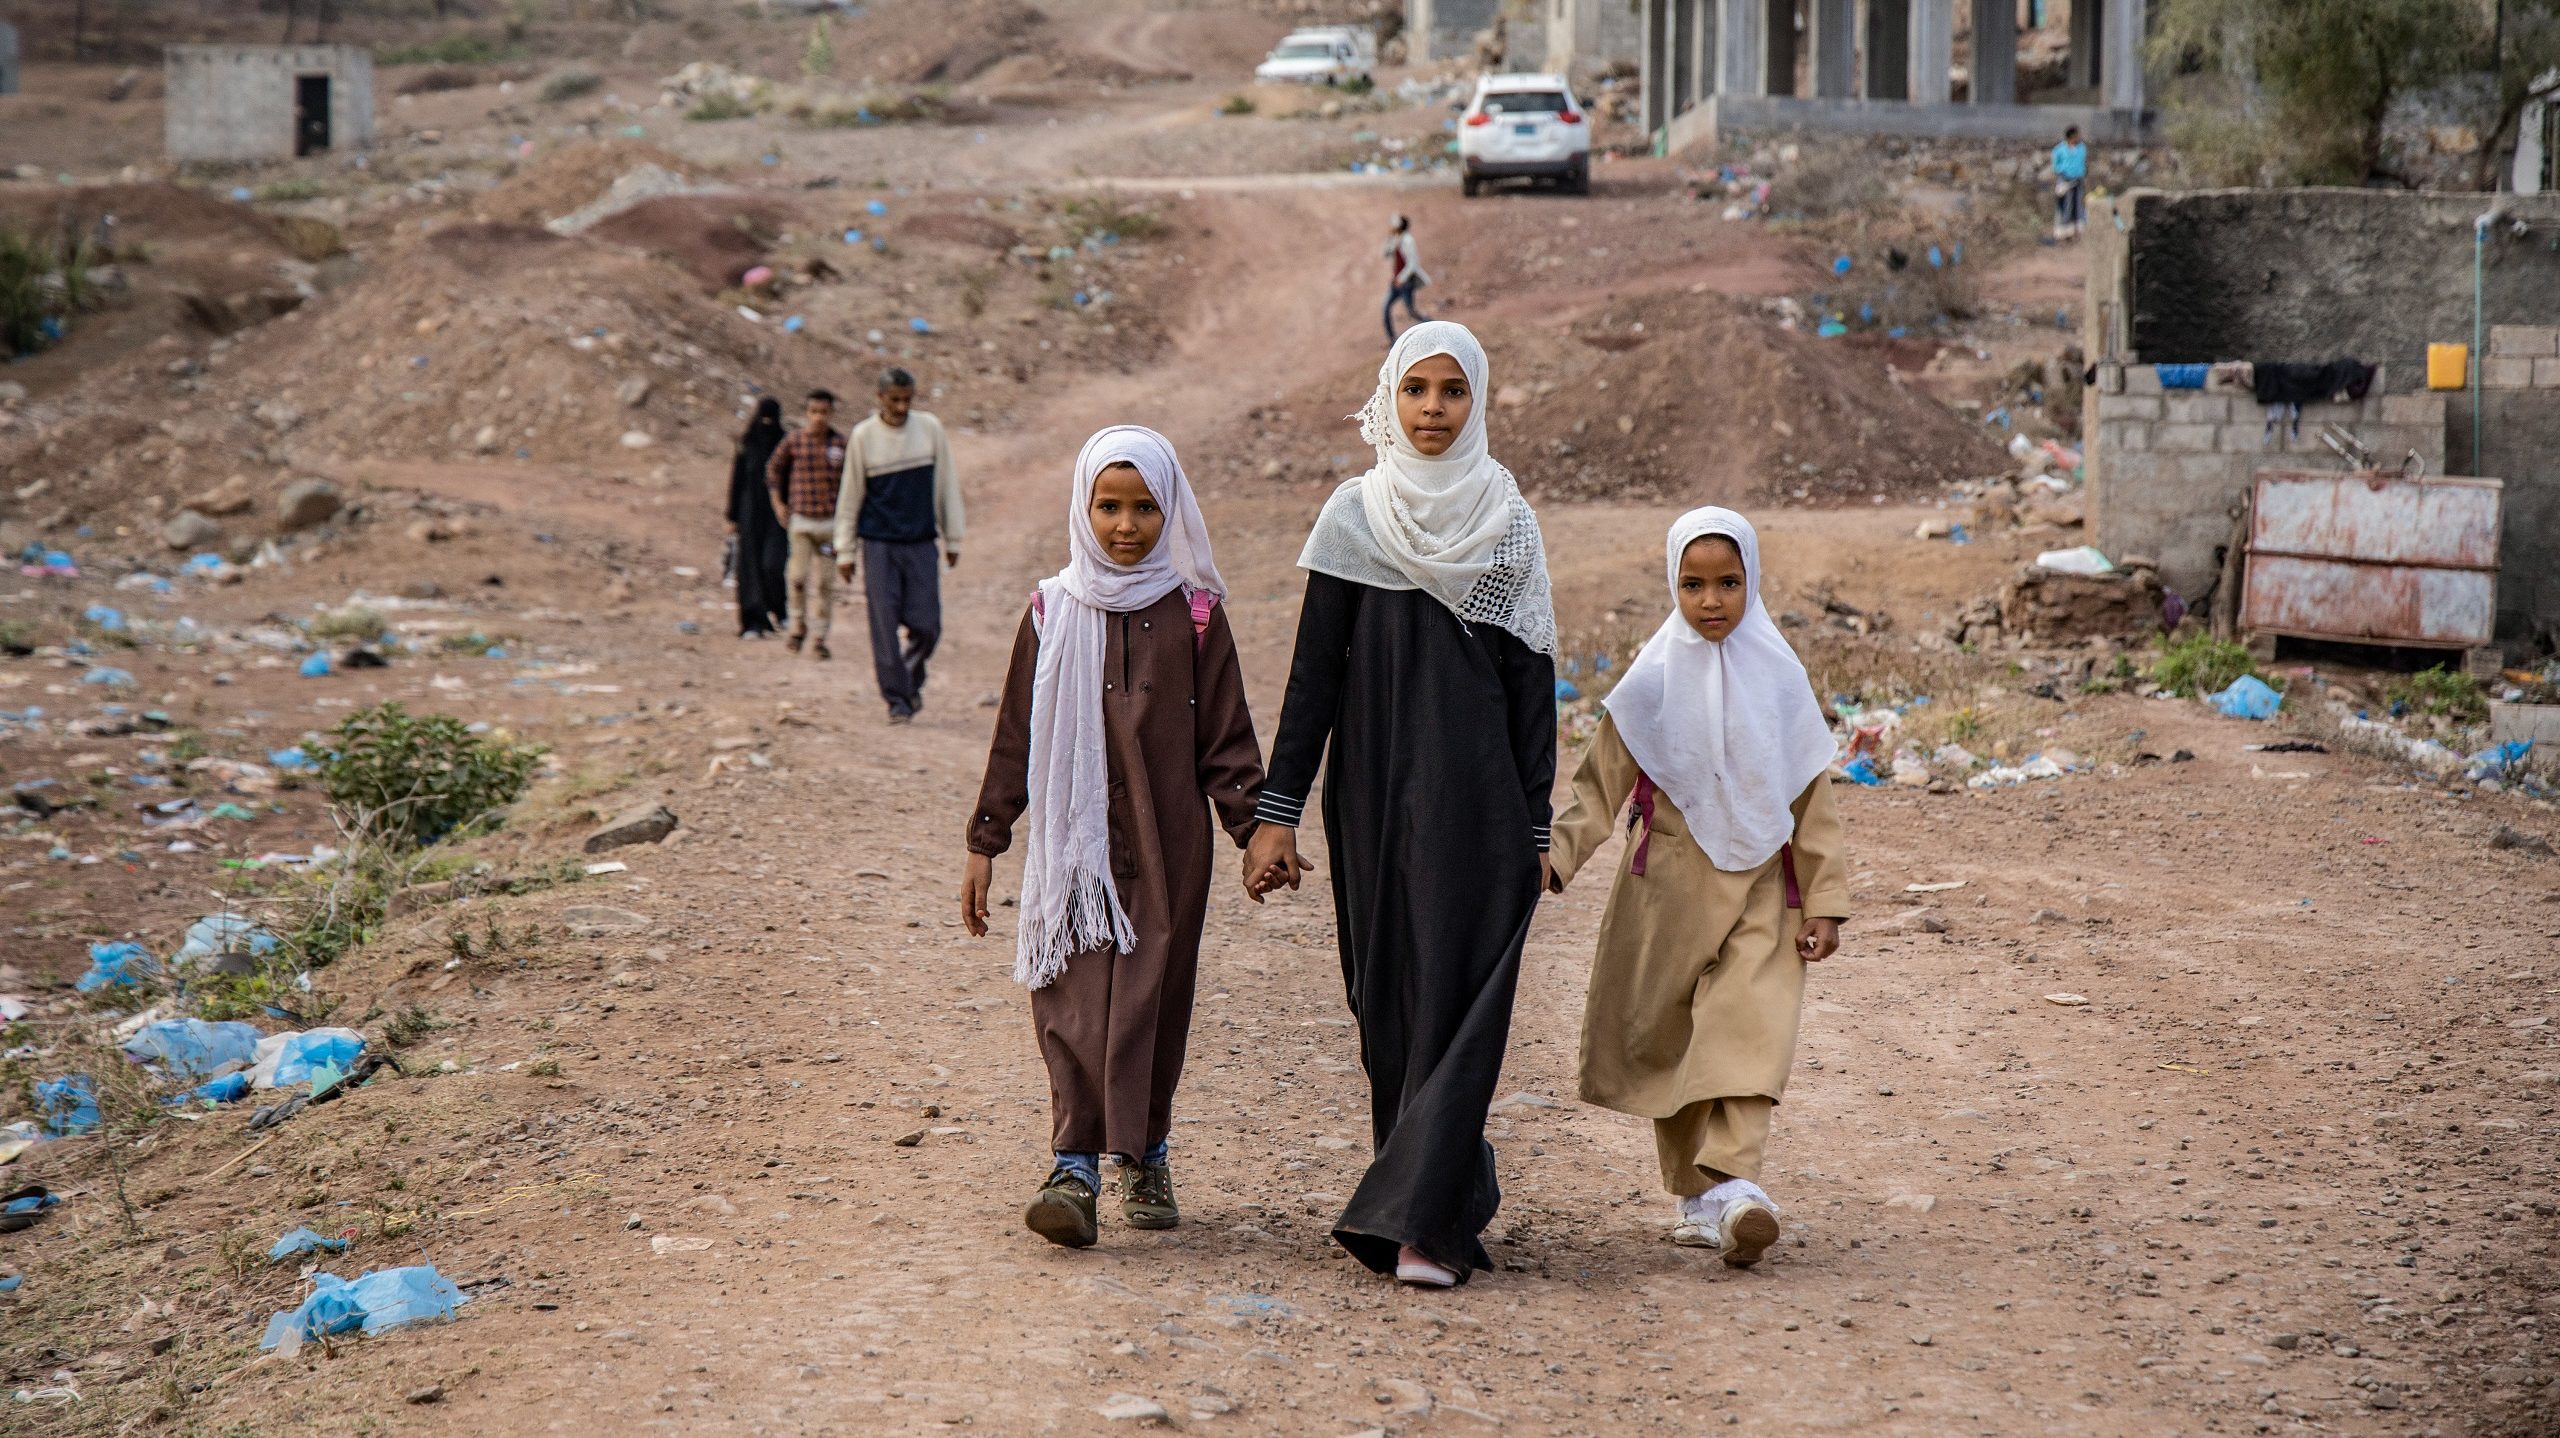 UNICEF: 6 Million Yemeni Children Could Have Their Schooling Interrupted